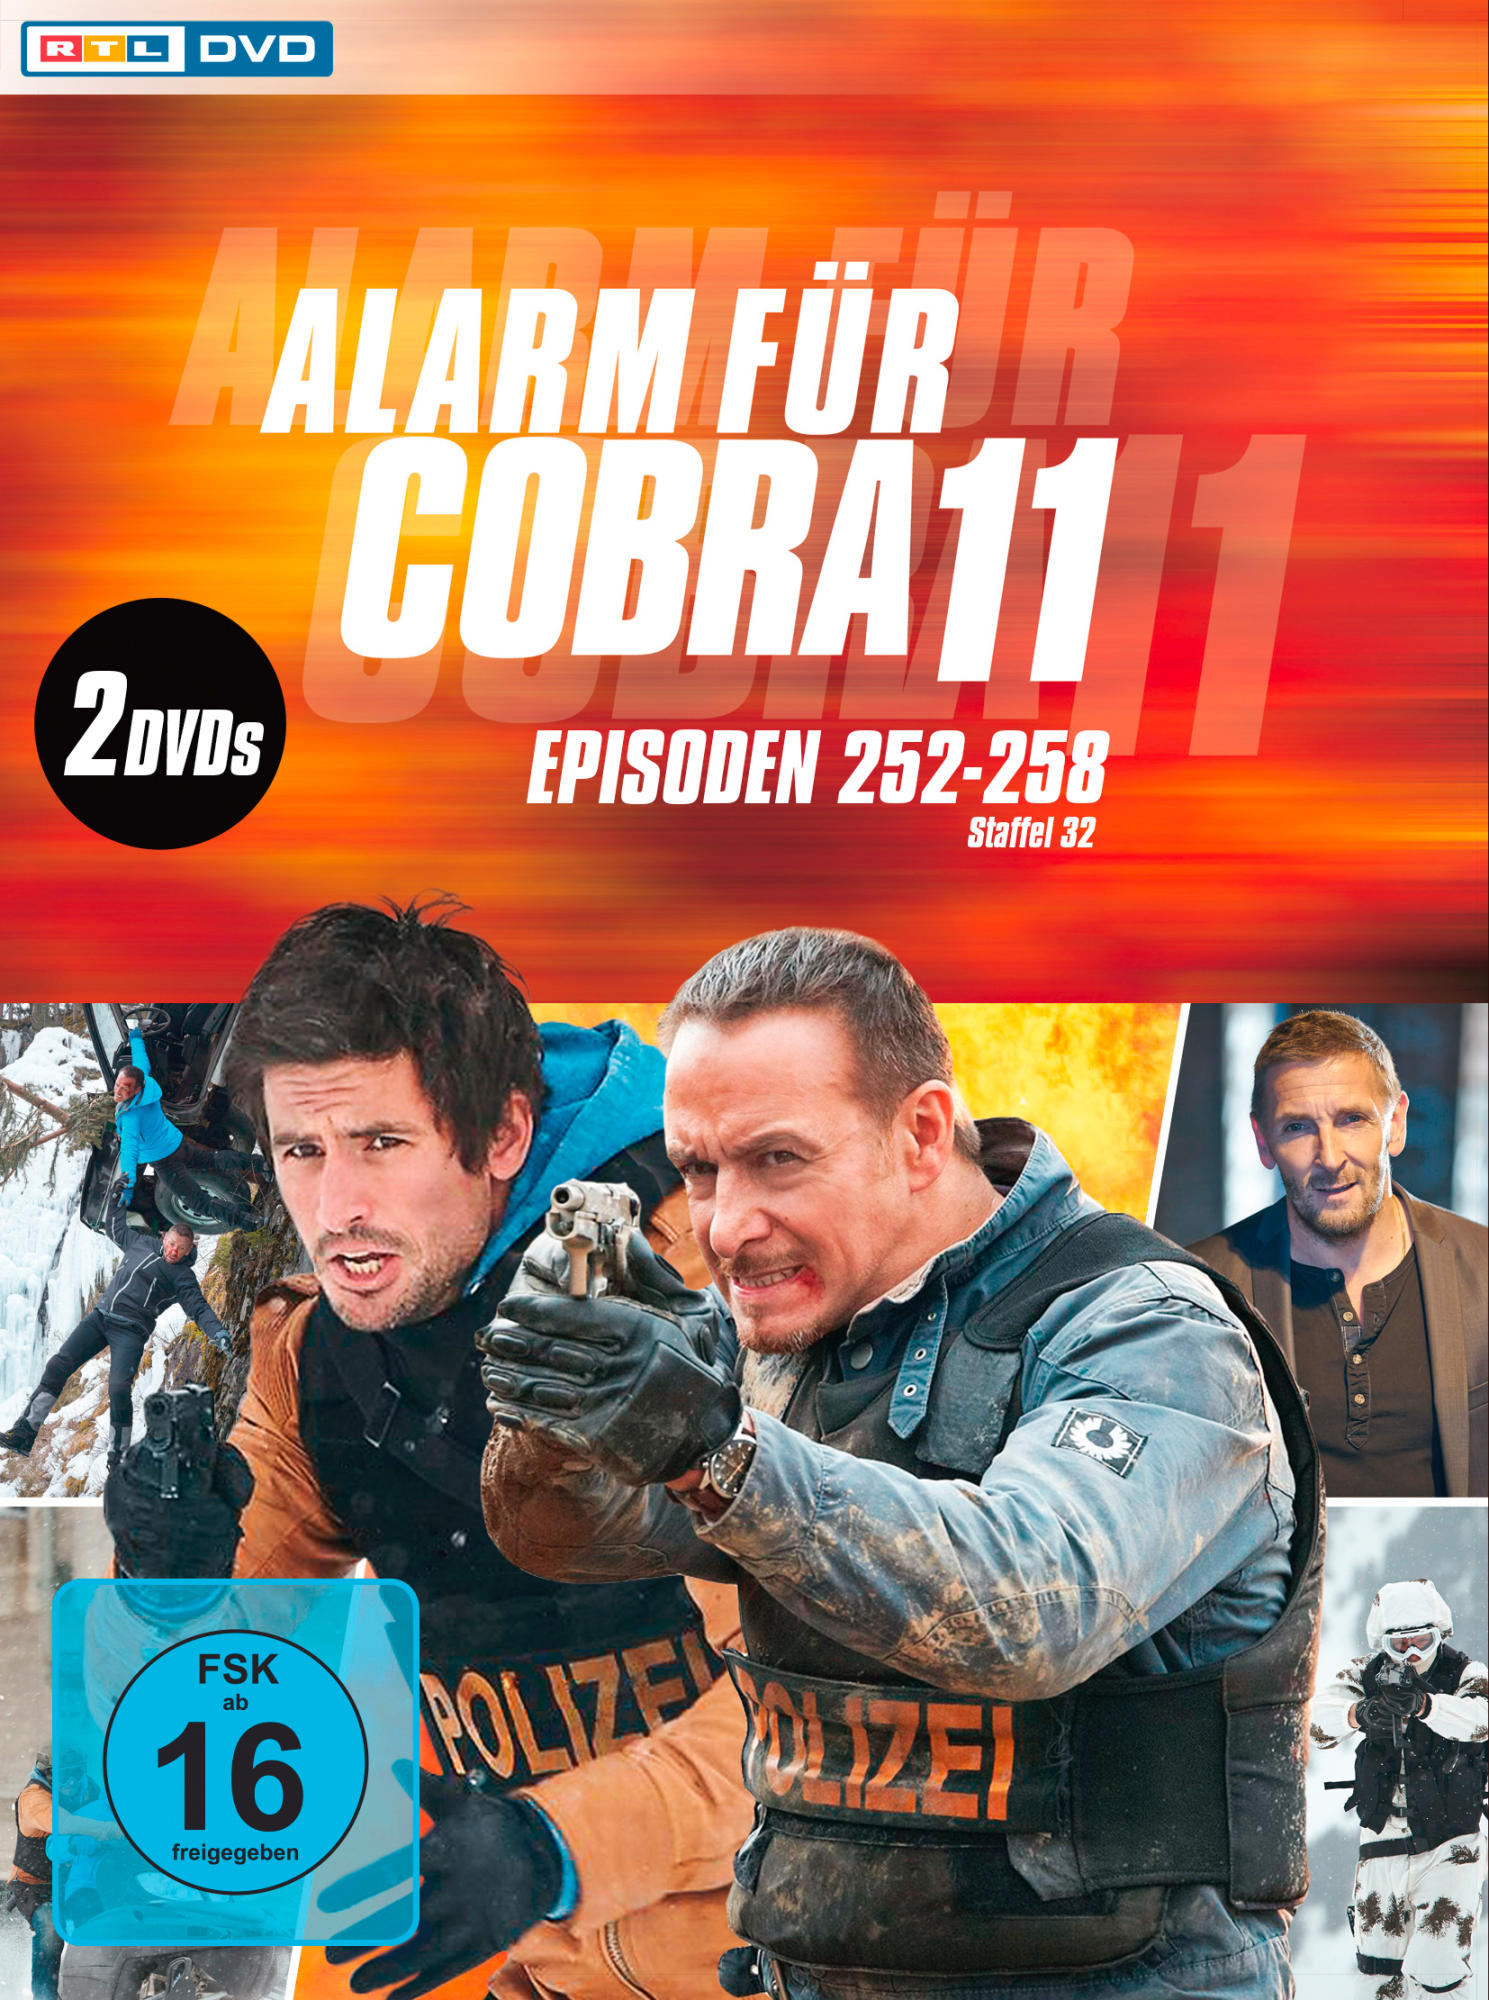 Alarm für Cobra 11 Staffel DVD 32 